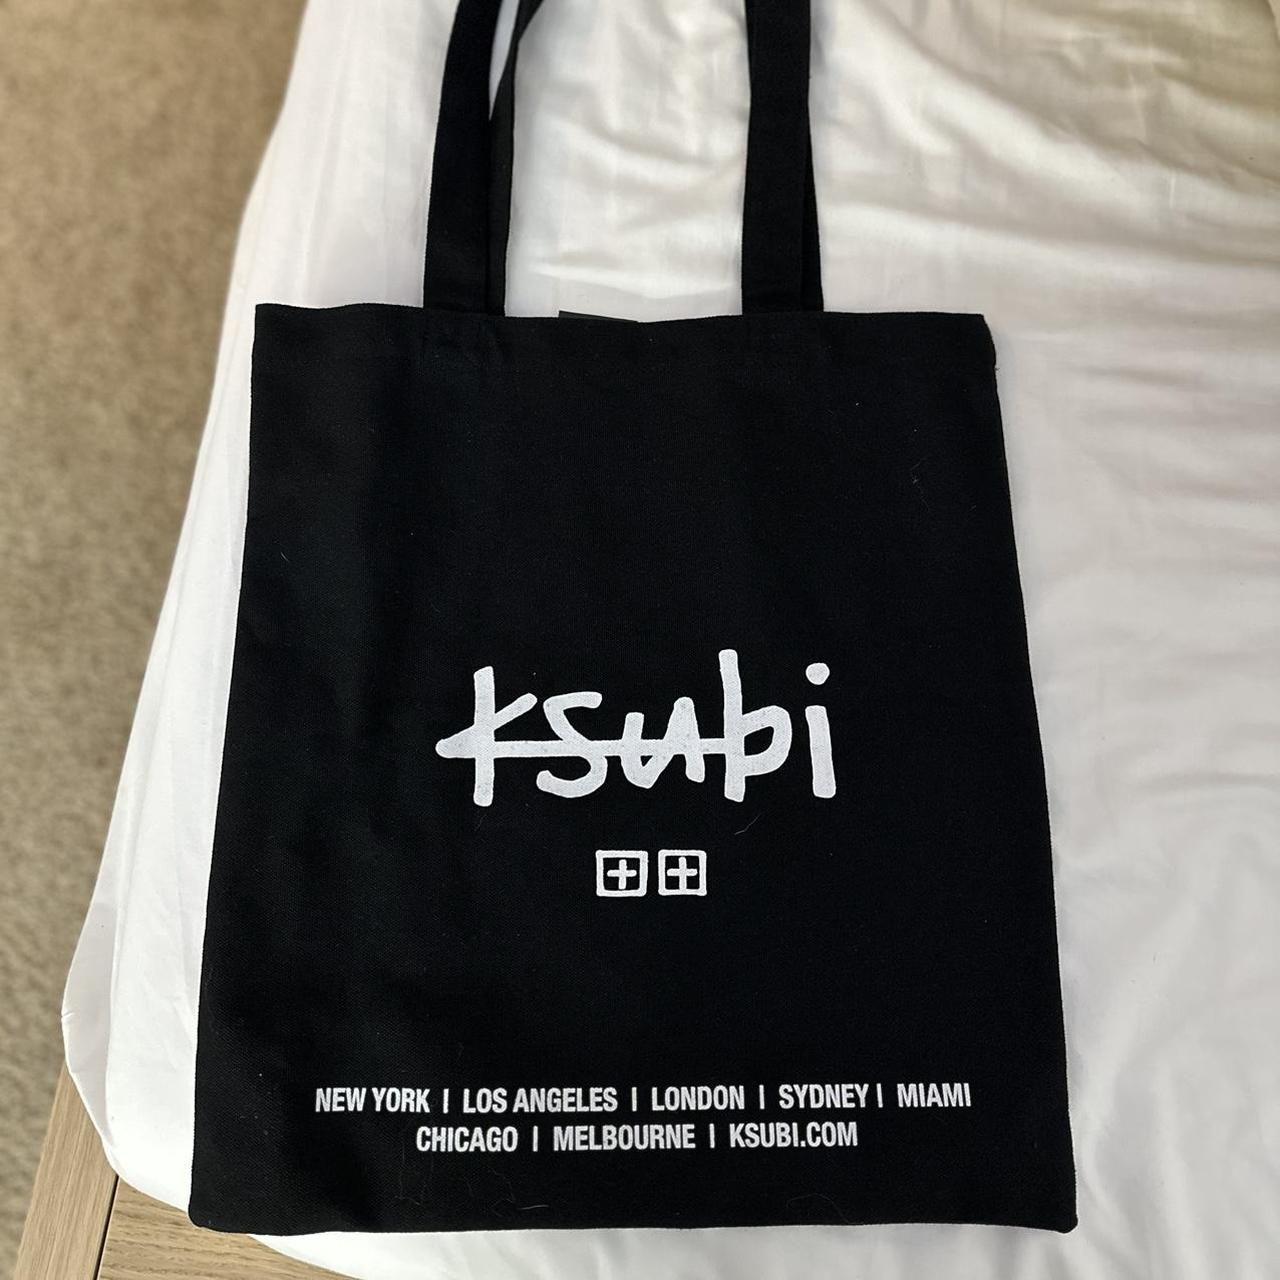 Ksubi tote bag never used still has tag - Depop